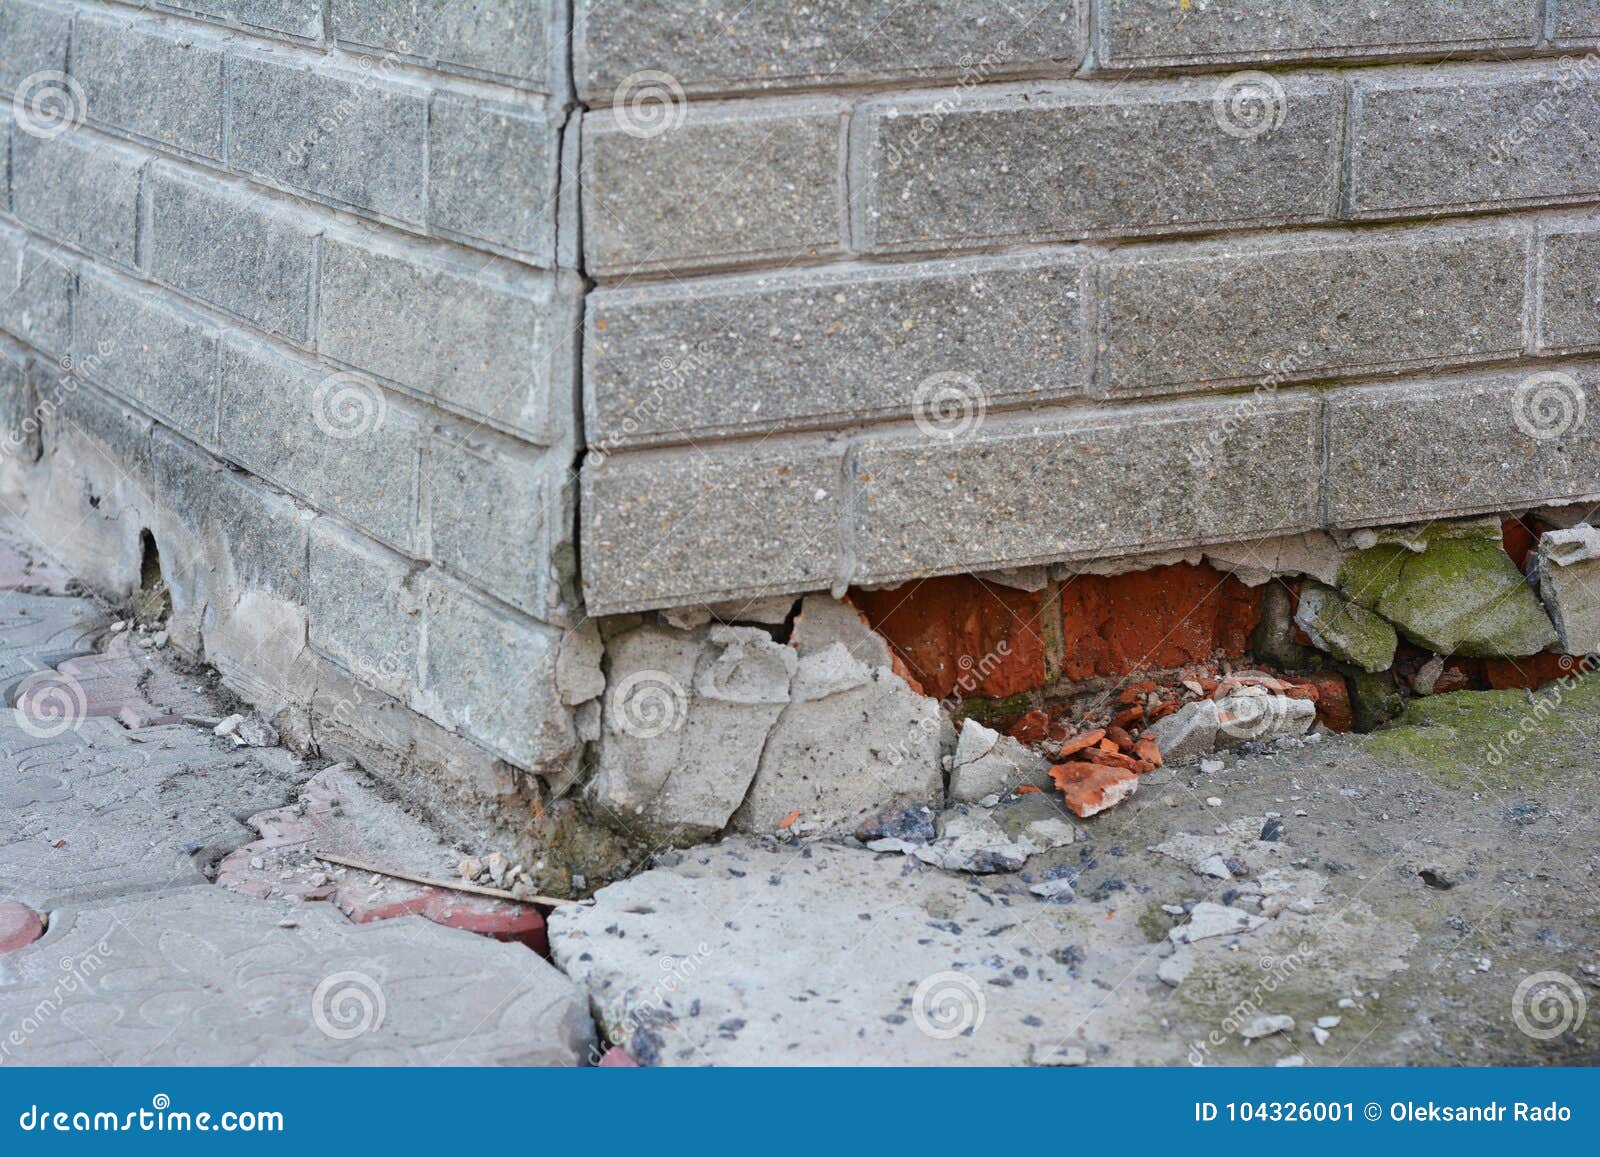 foundation repair - warning signs. house foundation repair. foundation repair. broken foundation house